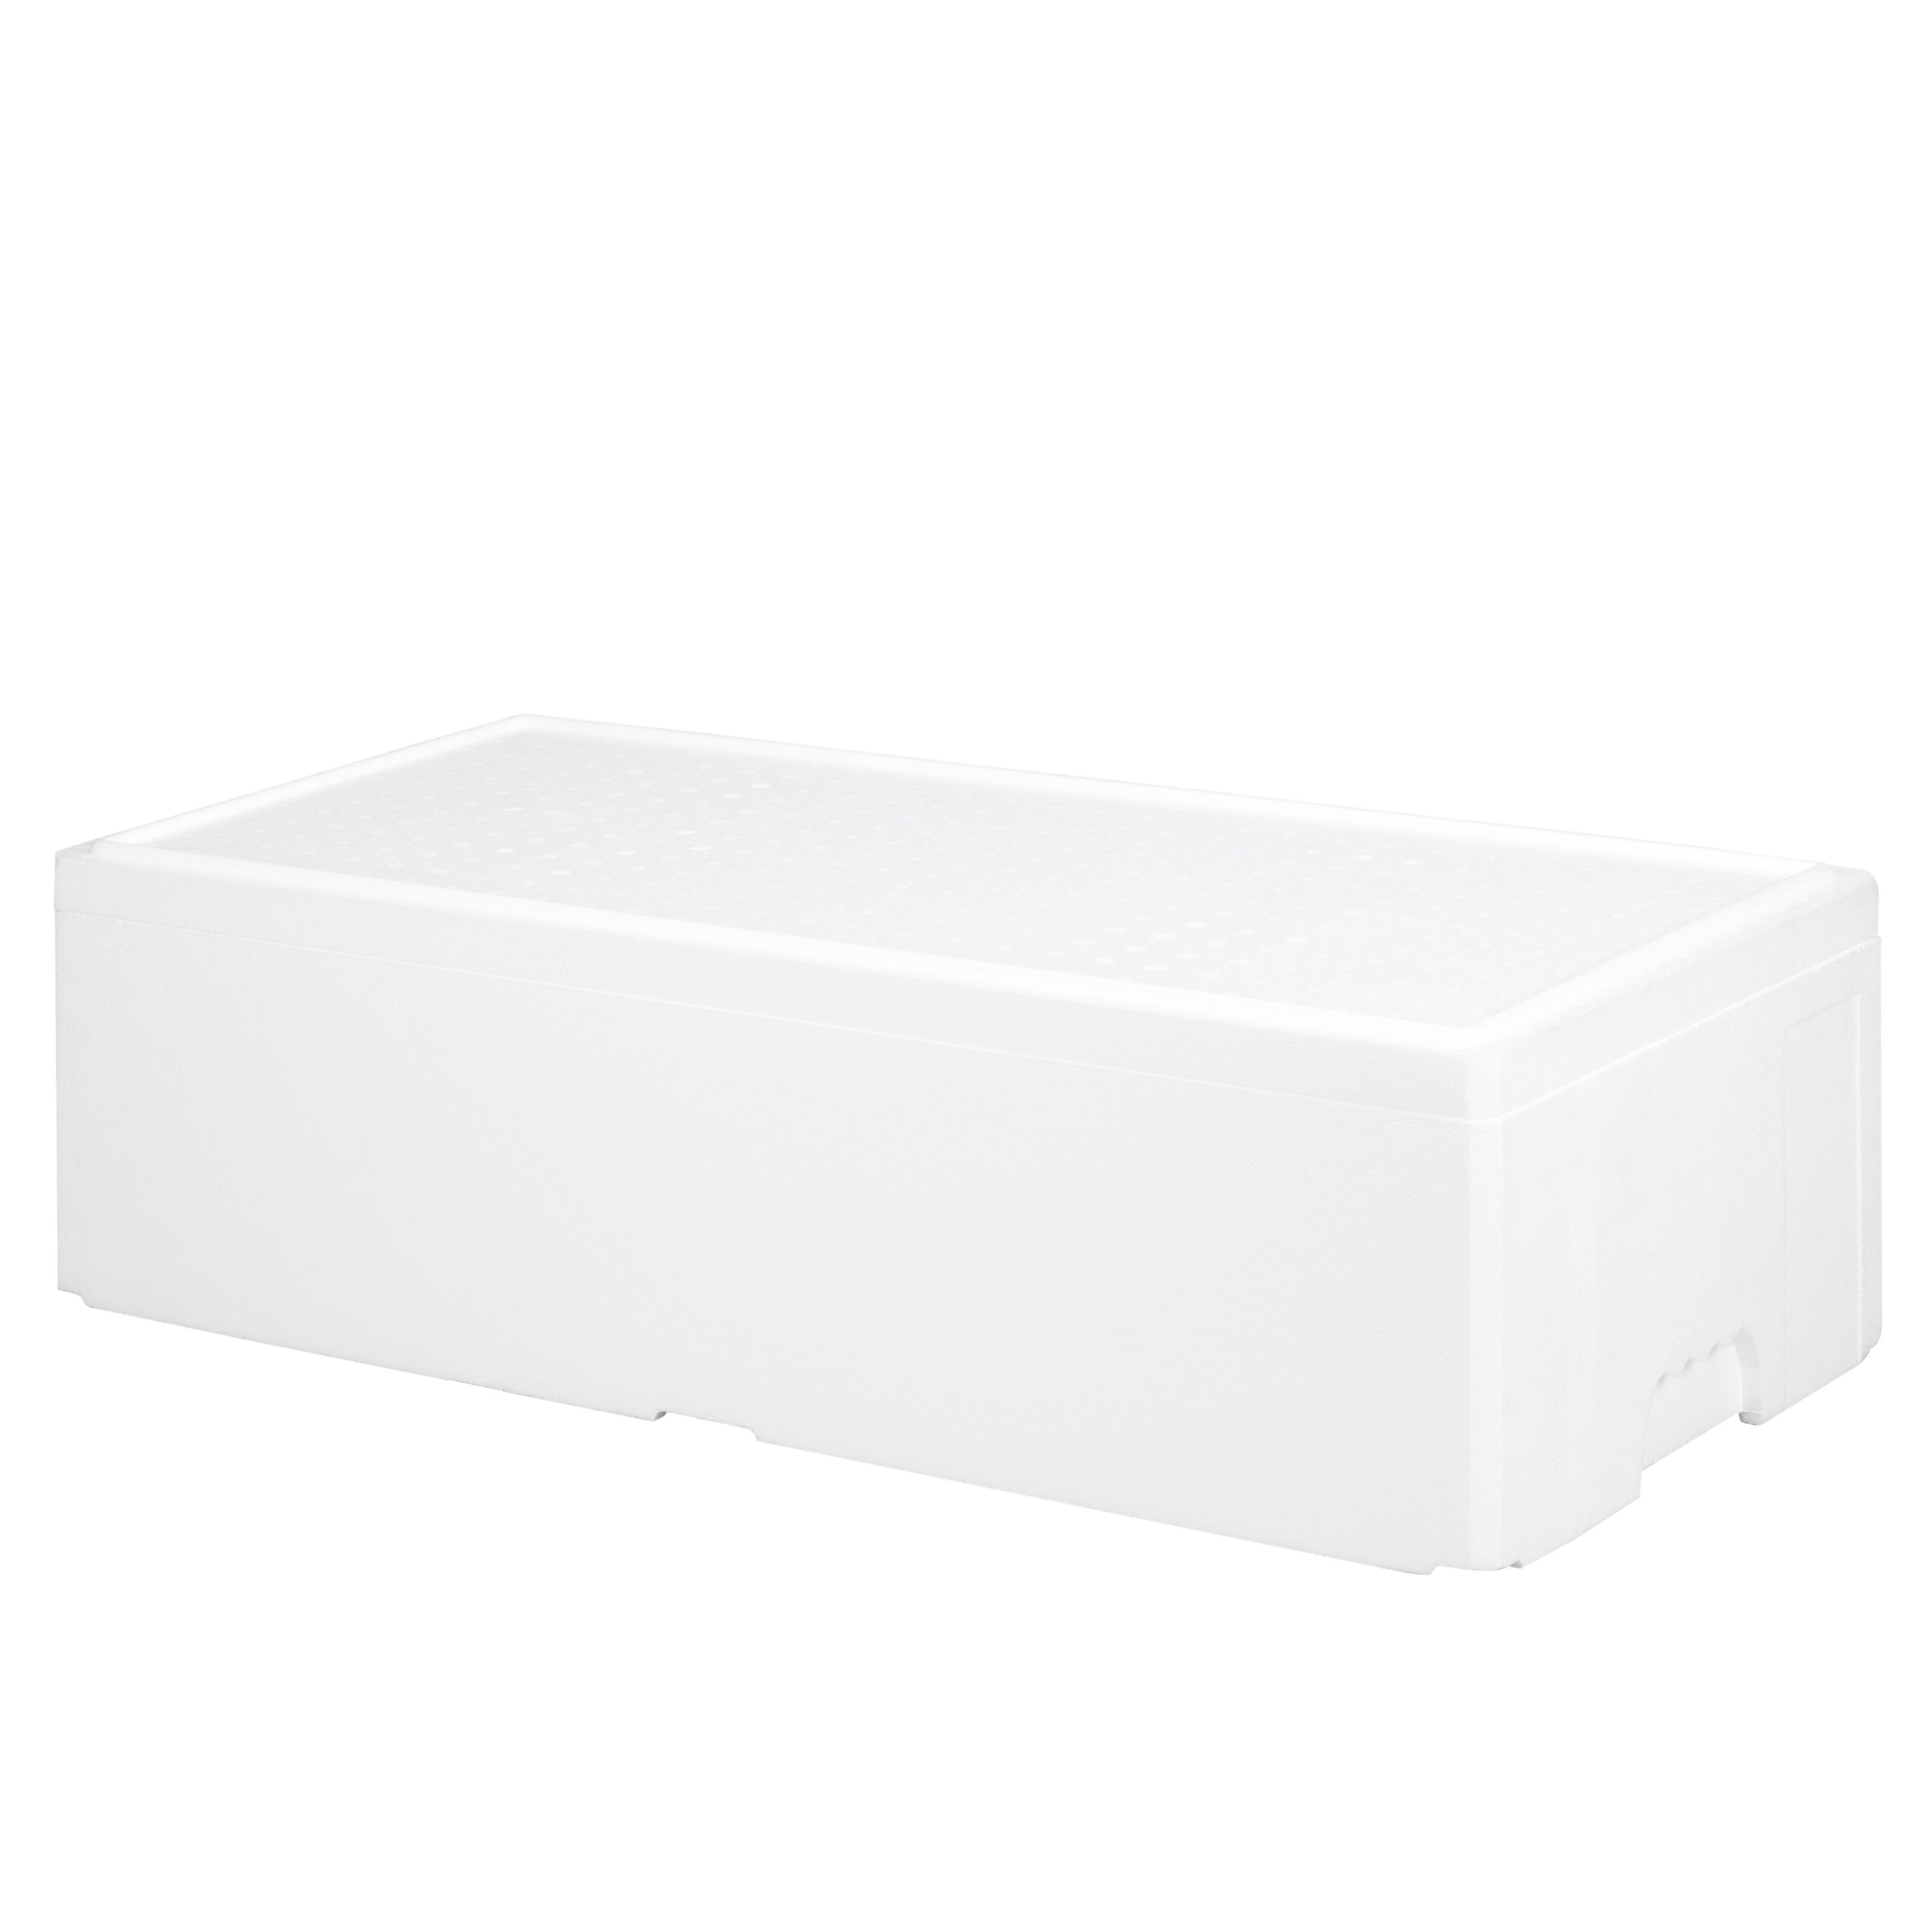 Insulated Box – 740 x 340 x 175mm